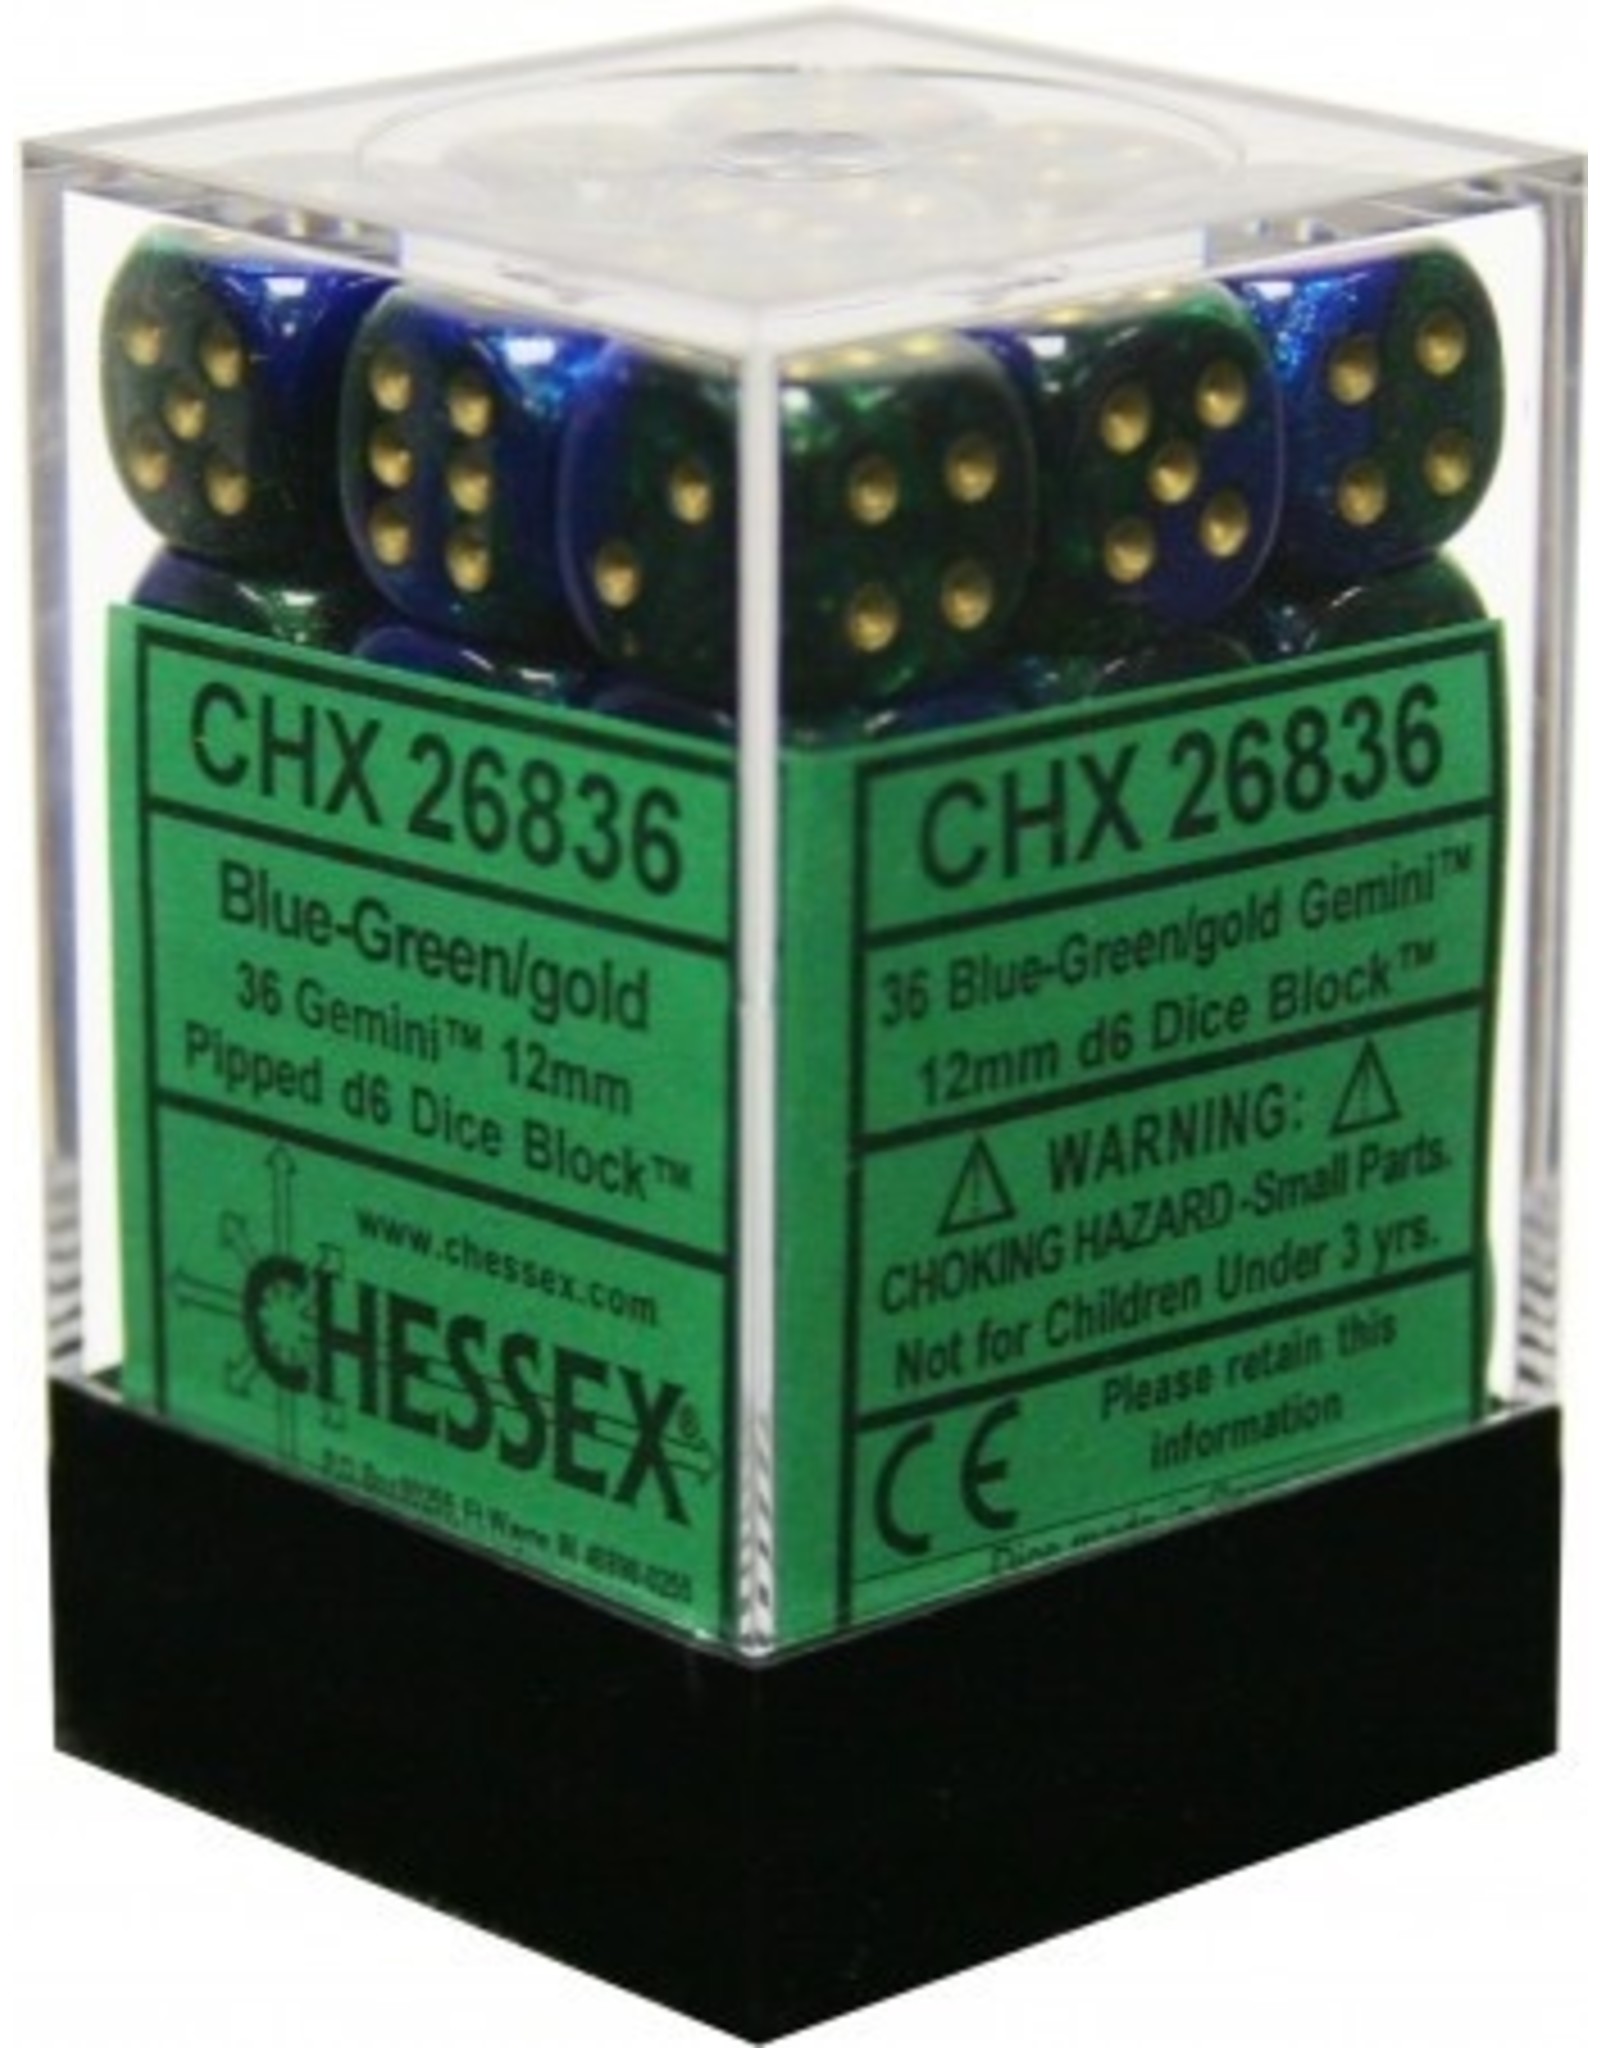 Chessex d6Cube12mmGemini#3 BUGRgd (36